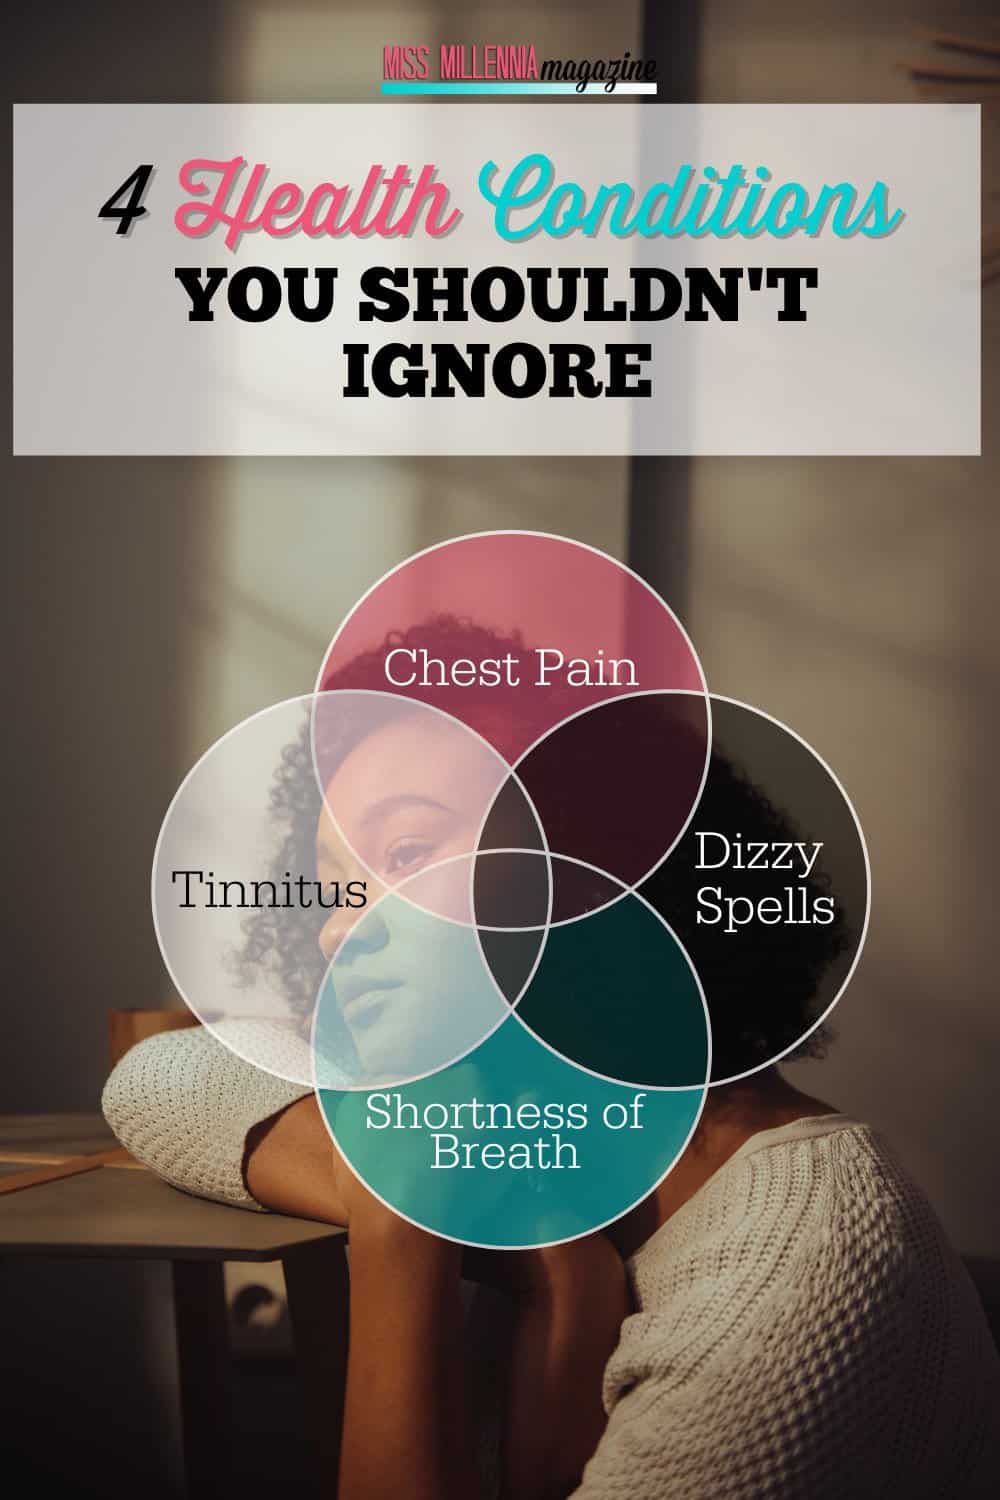 4 Health Conditions You Shouldn’t Ignore